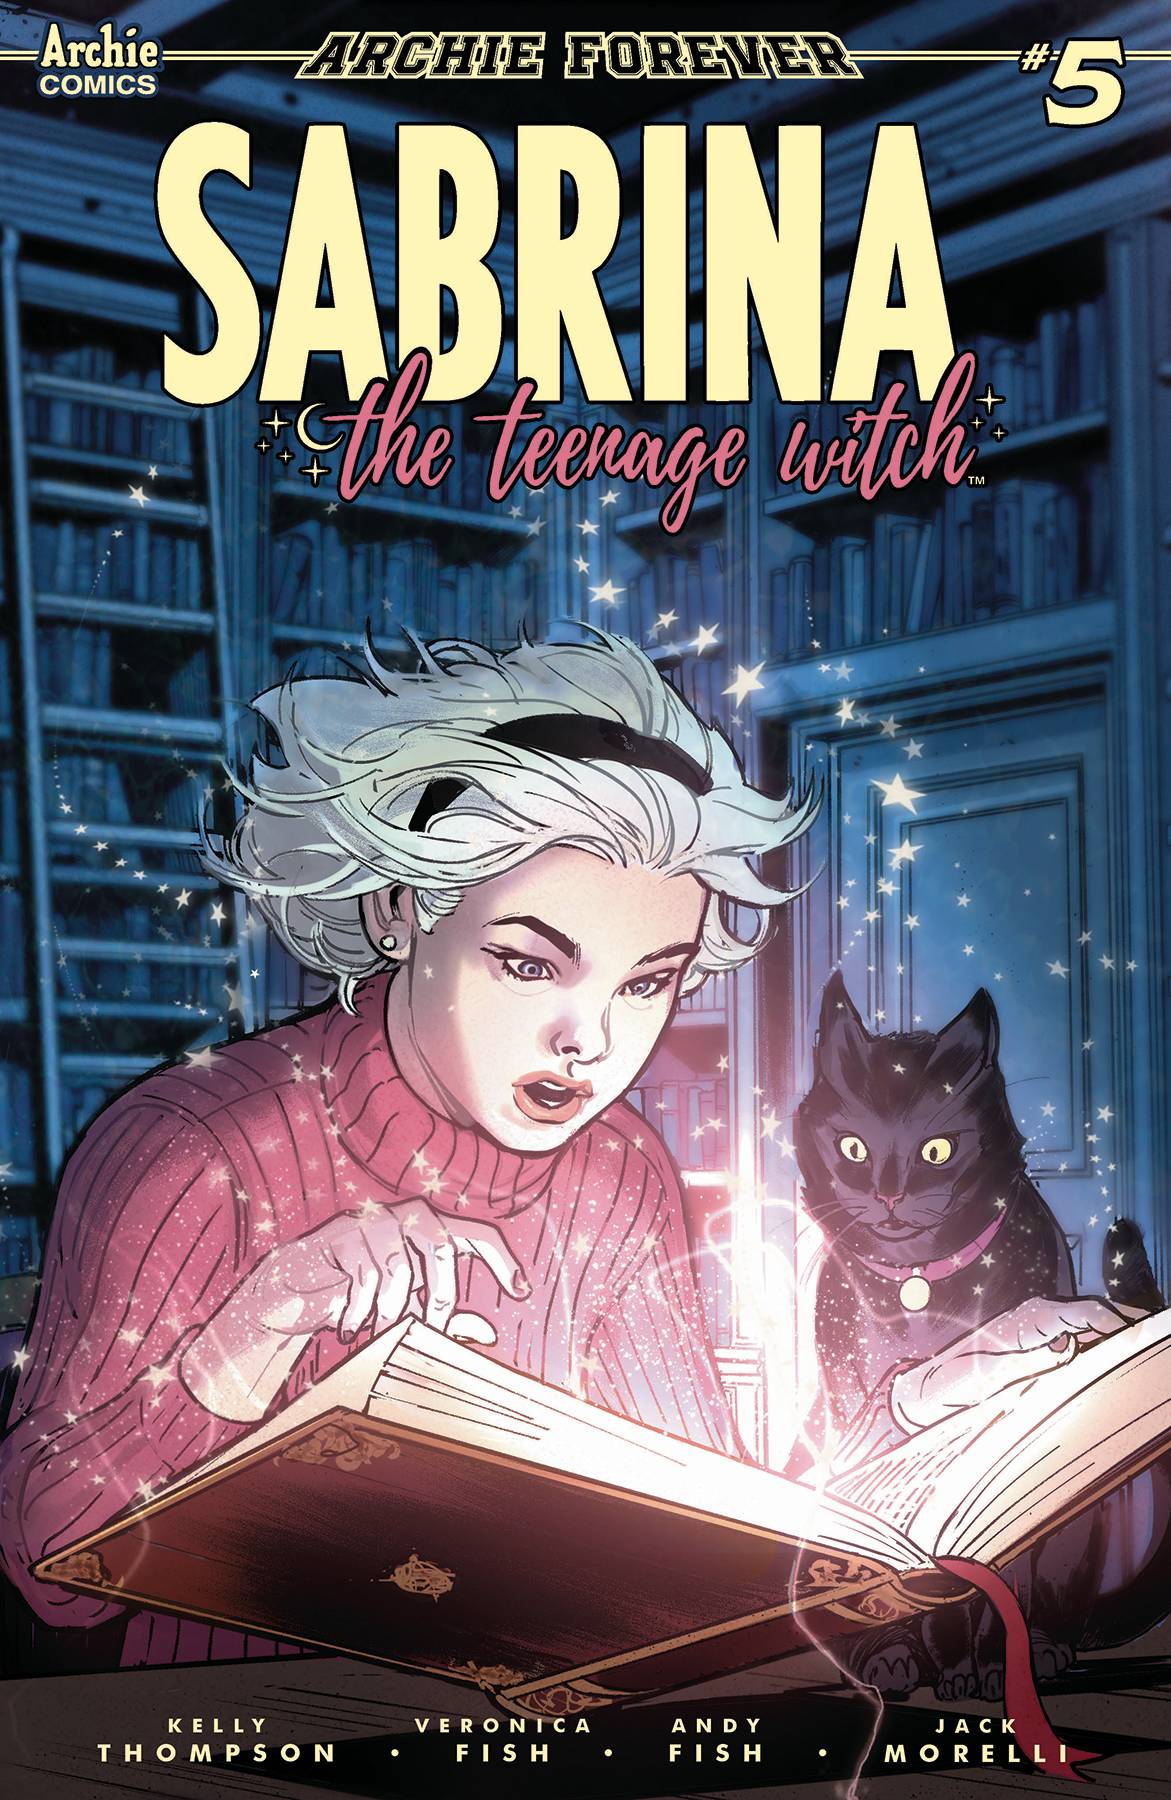 Sabrina the Teenage Witch (Vol. 3) 5 Var C Comic Book NM